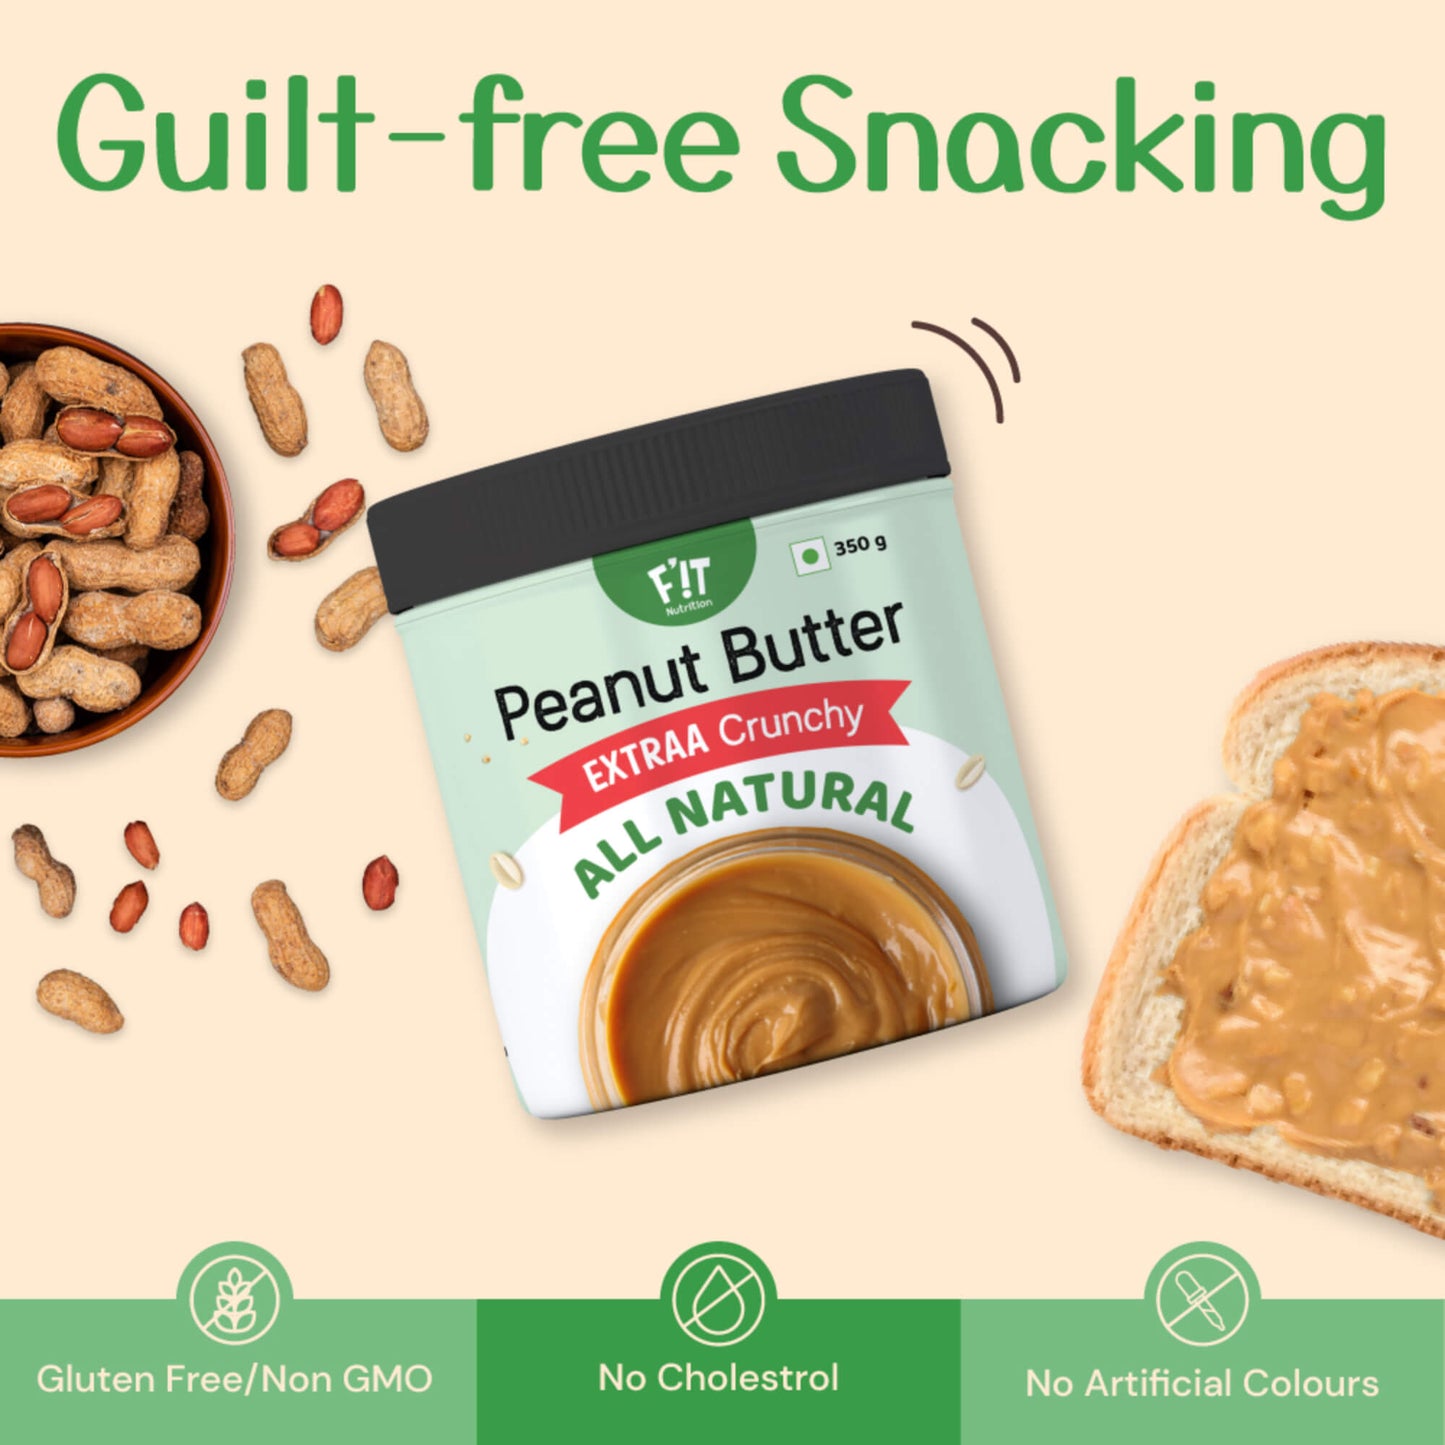 Natural (Unsweetened) Peanut Butter EXTRAA Crunchy | No Sugar | No Salt | No Preservatives | Rich in Protein | Vegan | Gluten Free | 350g